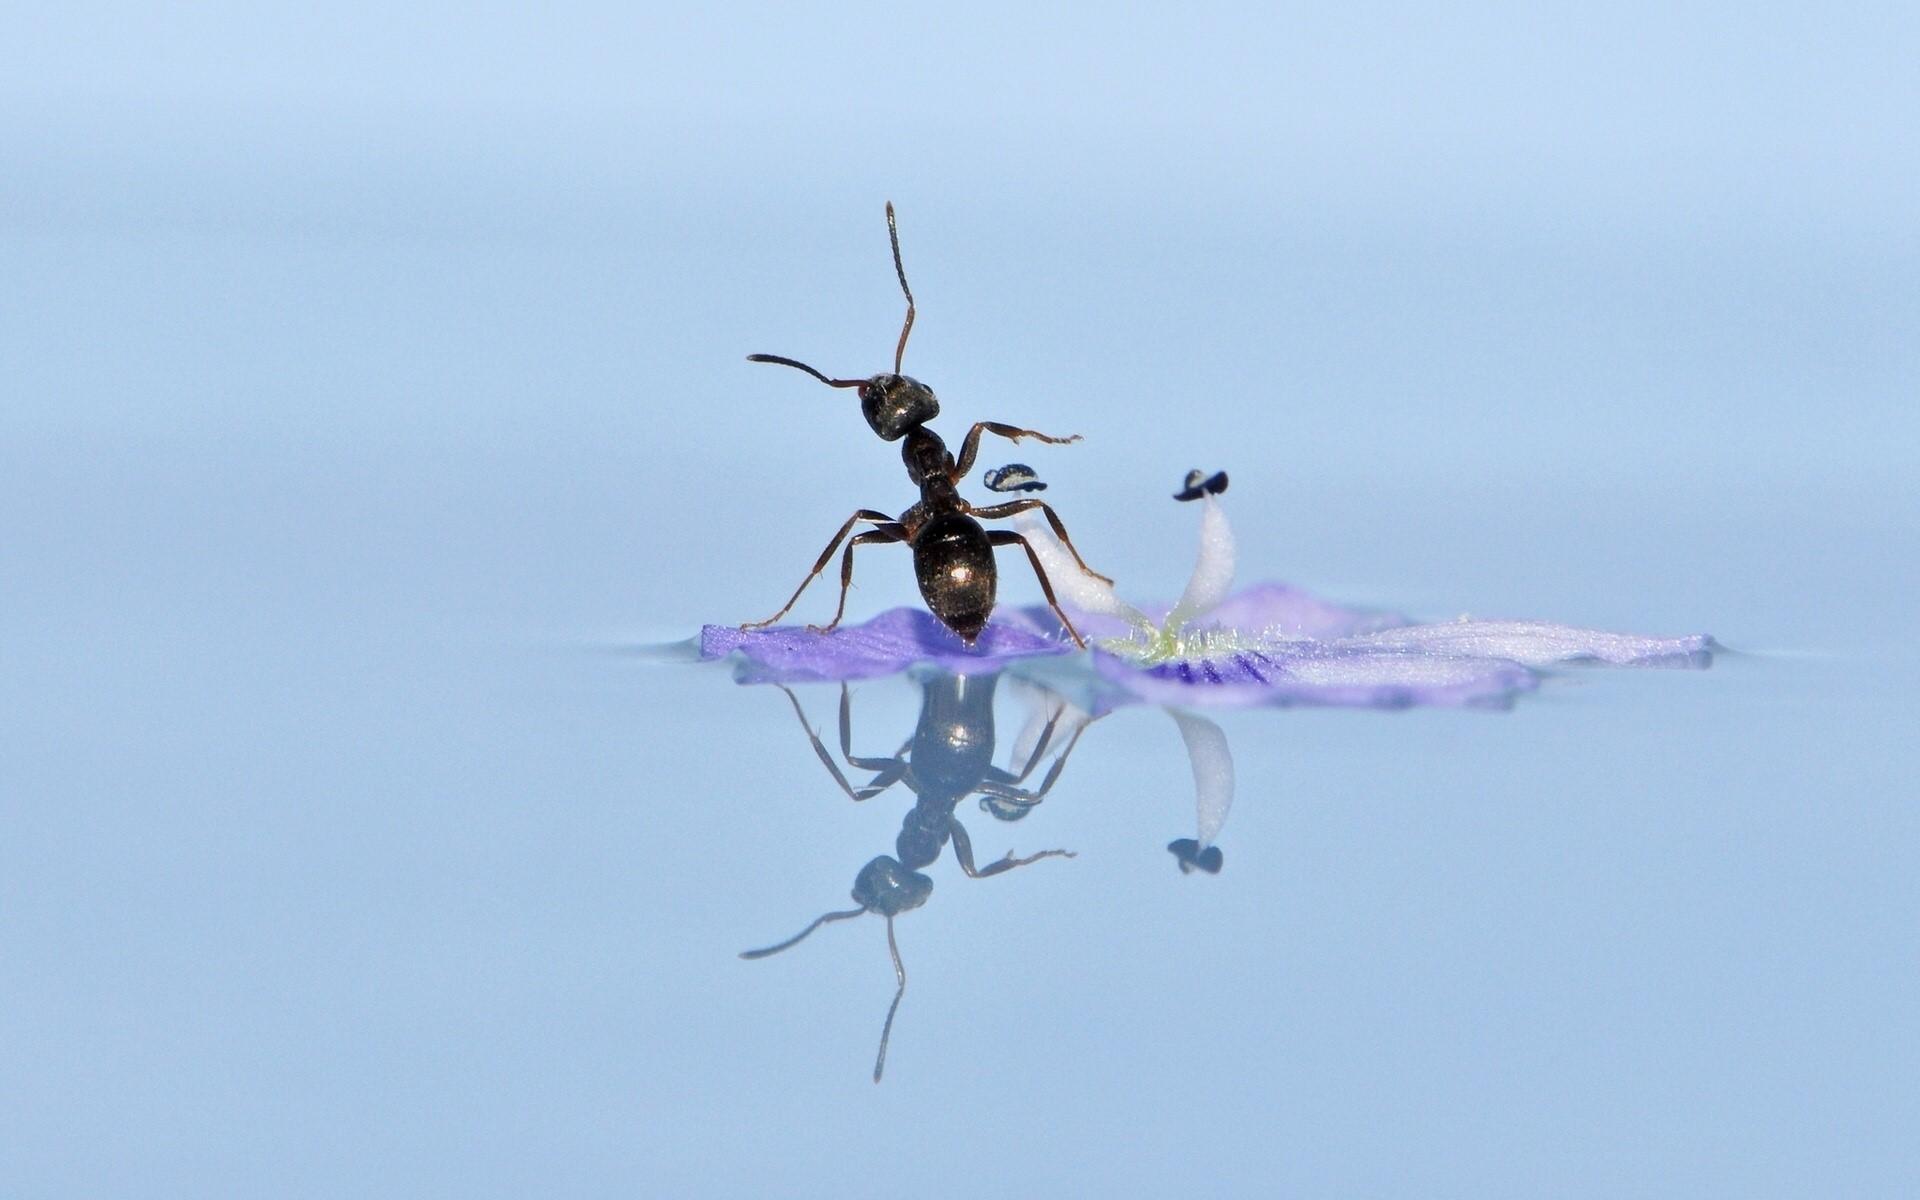 Big Black Ant Swim in Water on Flower Image